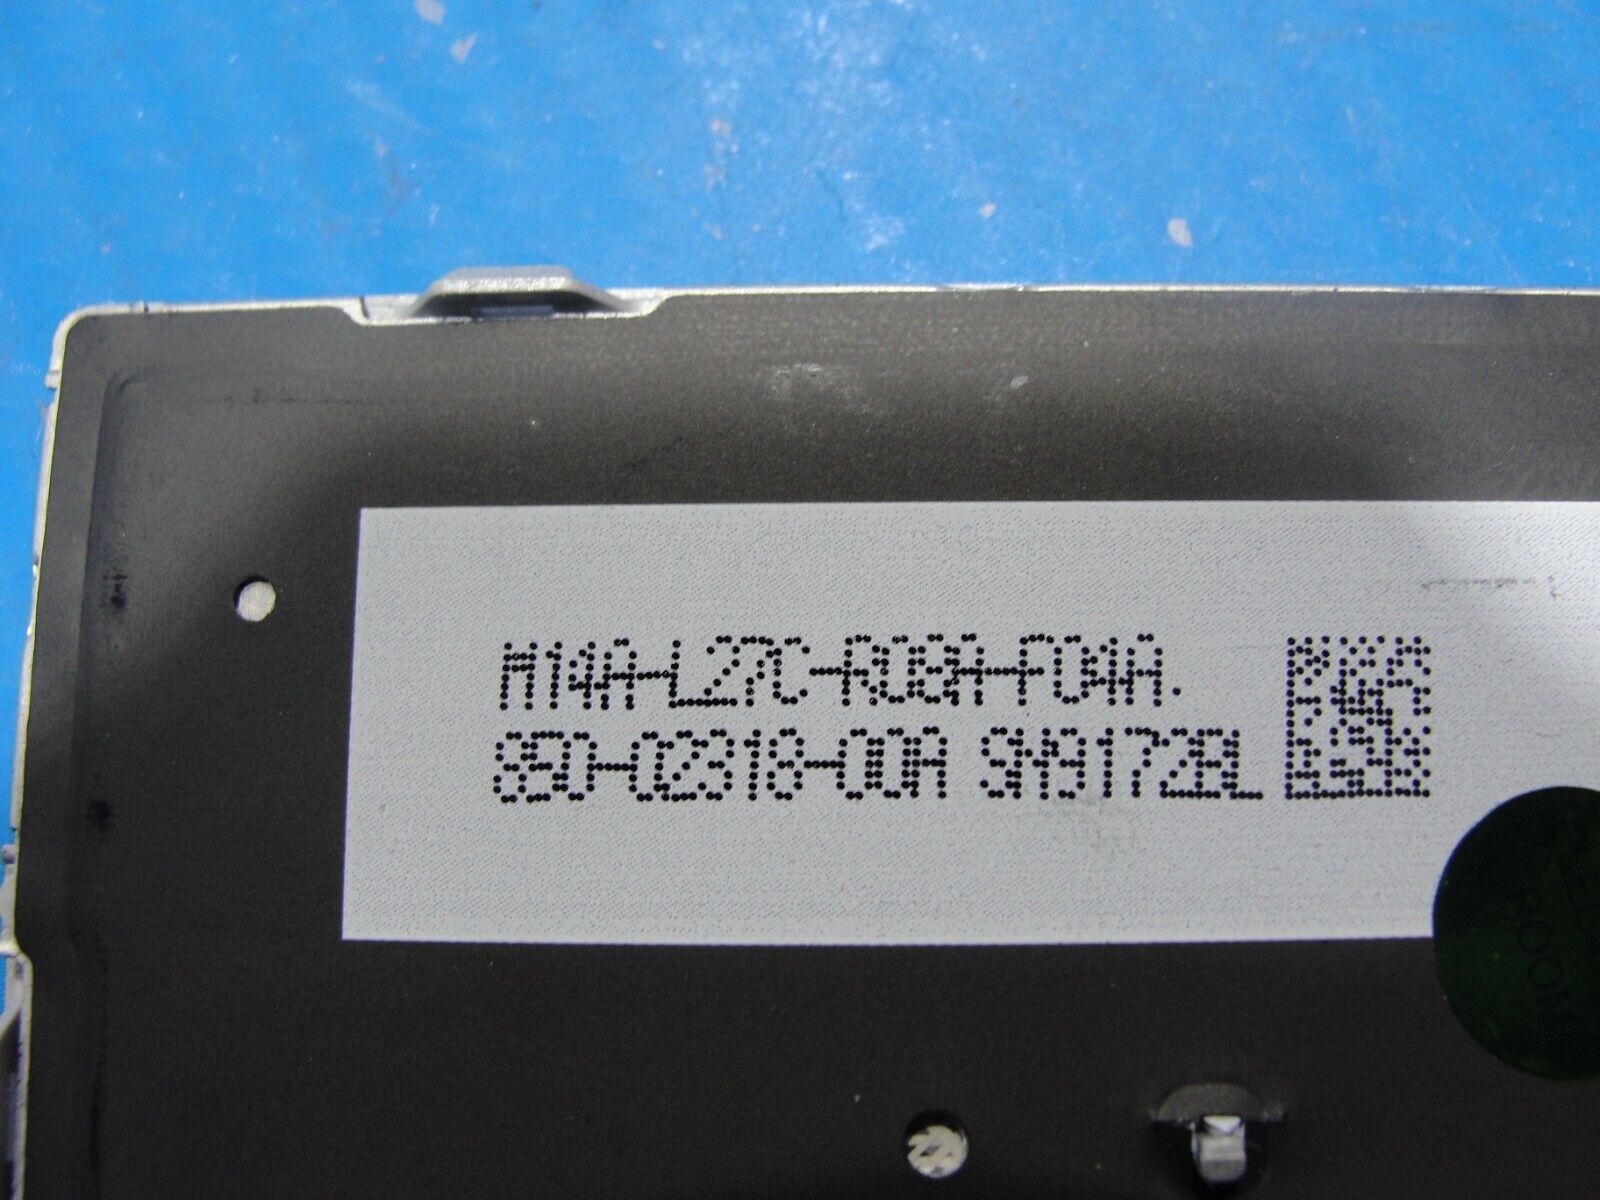 HP EliteBook 14” 840 G6 OEM Laptop US Backlit Keyboard L14377-001 6037B0138901